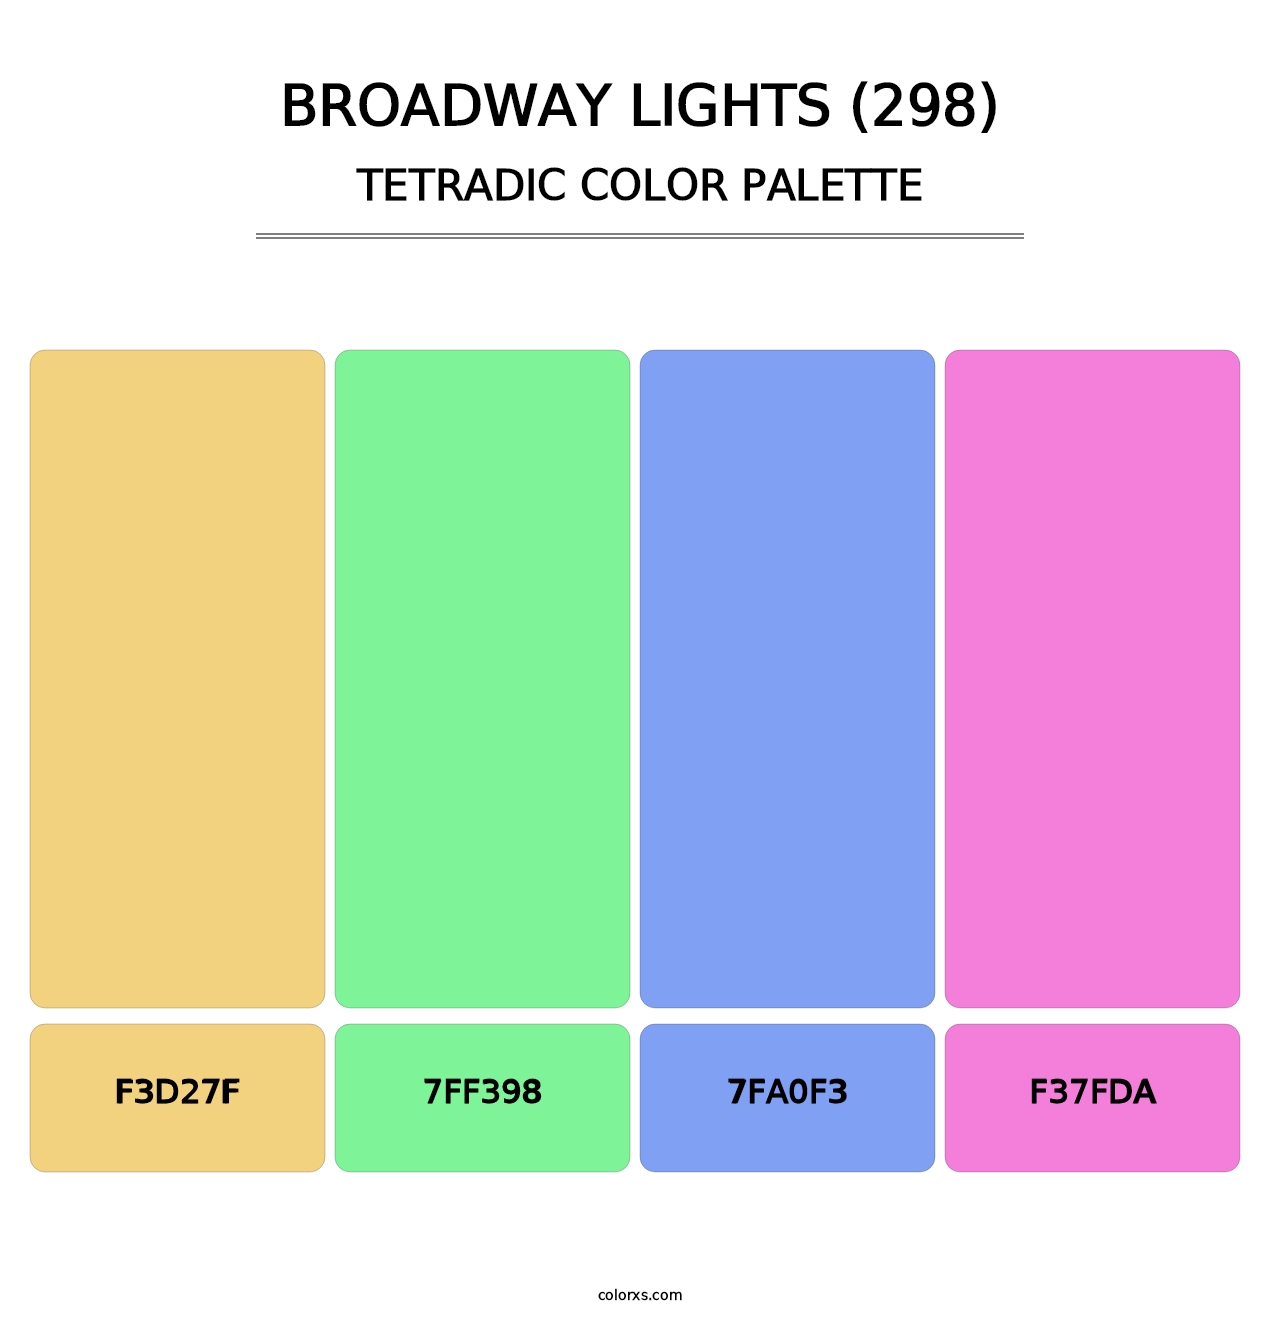 Broadway Lights (298) - Tetradic Color Palette